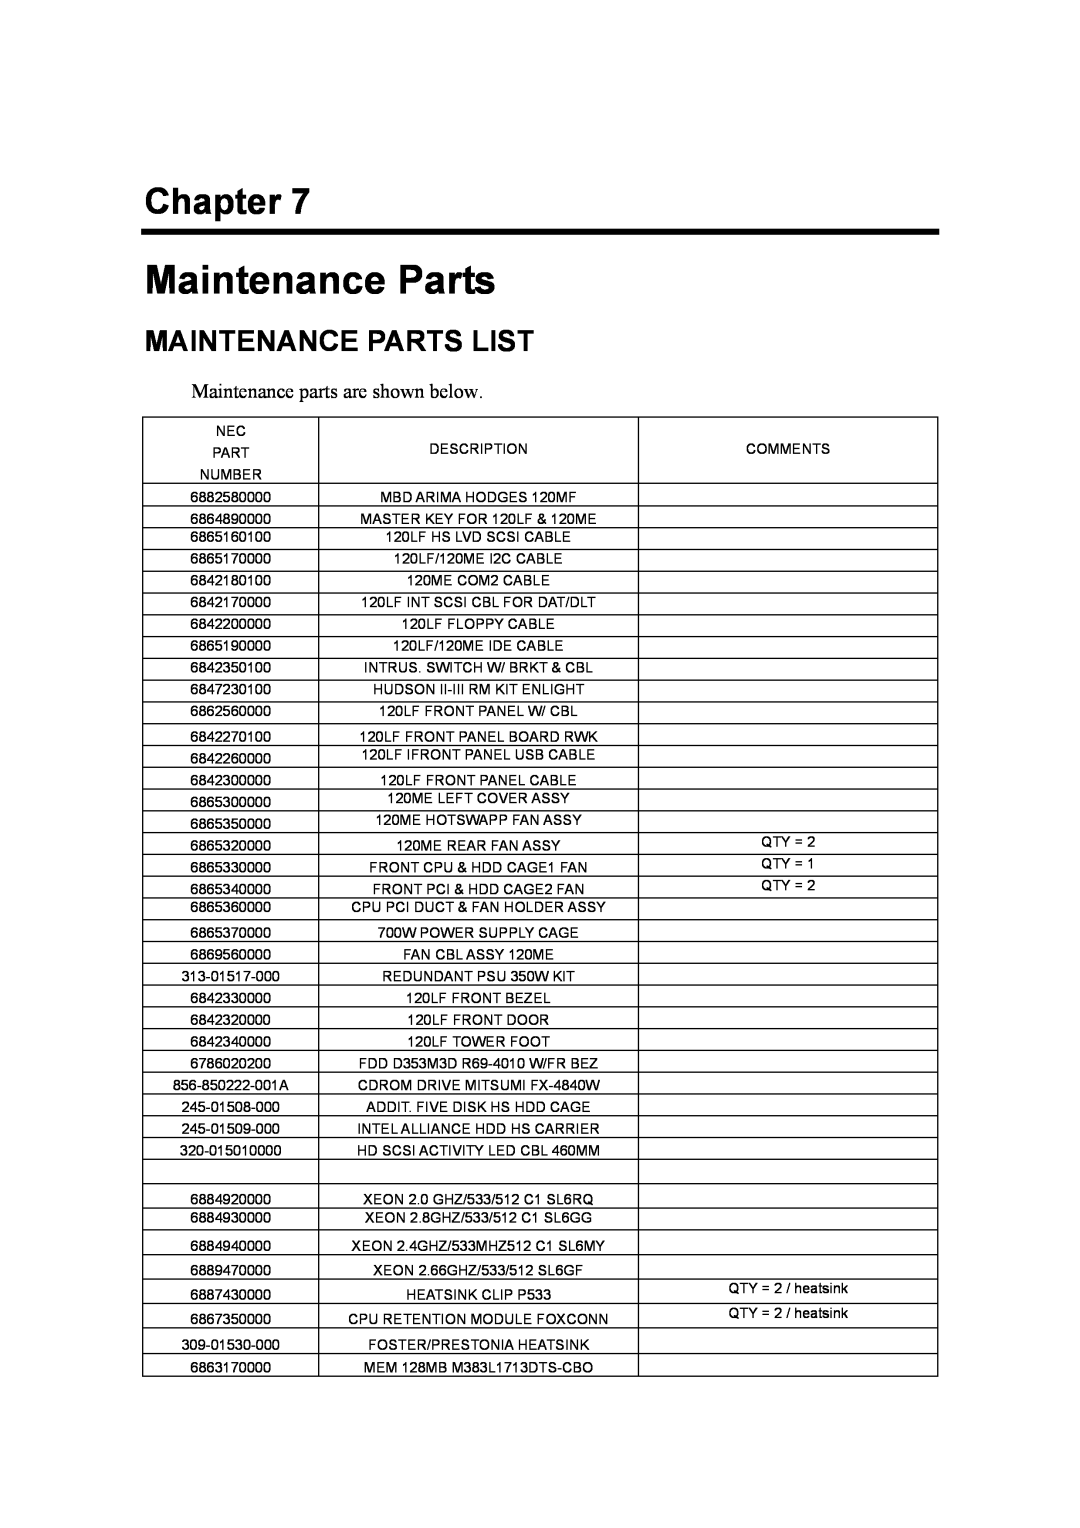 NEC 120Mf, 5800 manual Maintenance Parts List, Chapter 